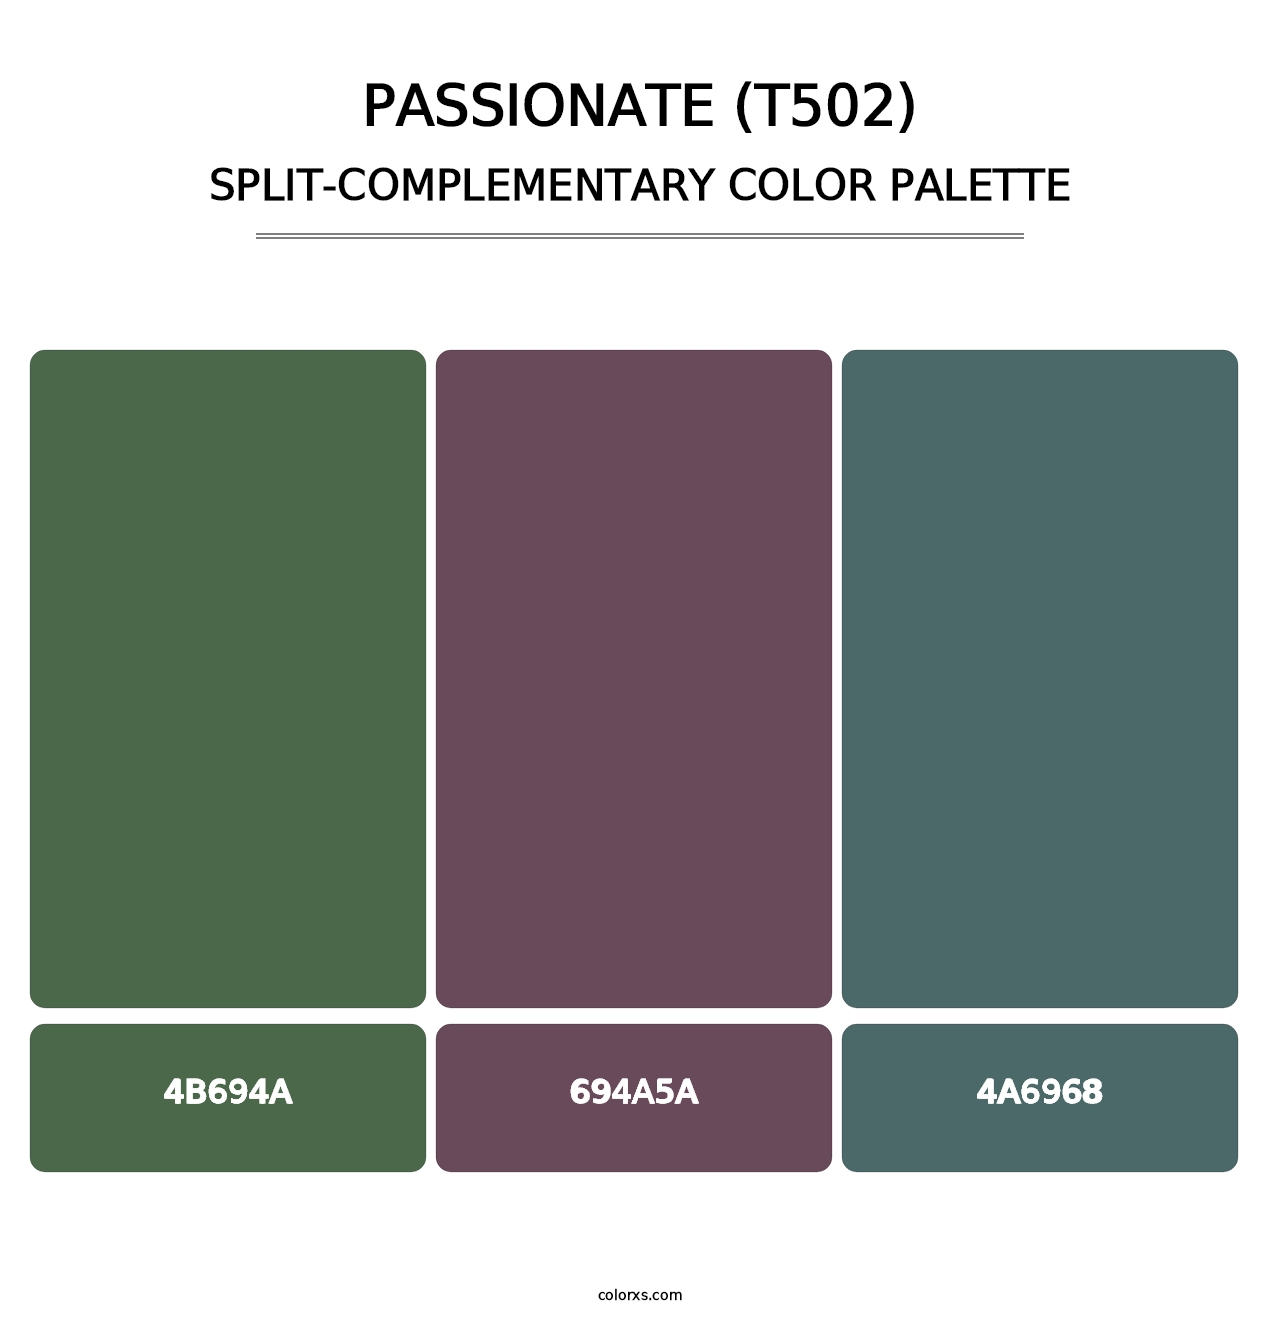 Passionate (T502) - Split-Complementary Color Palette